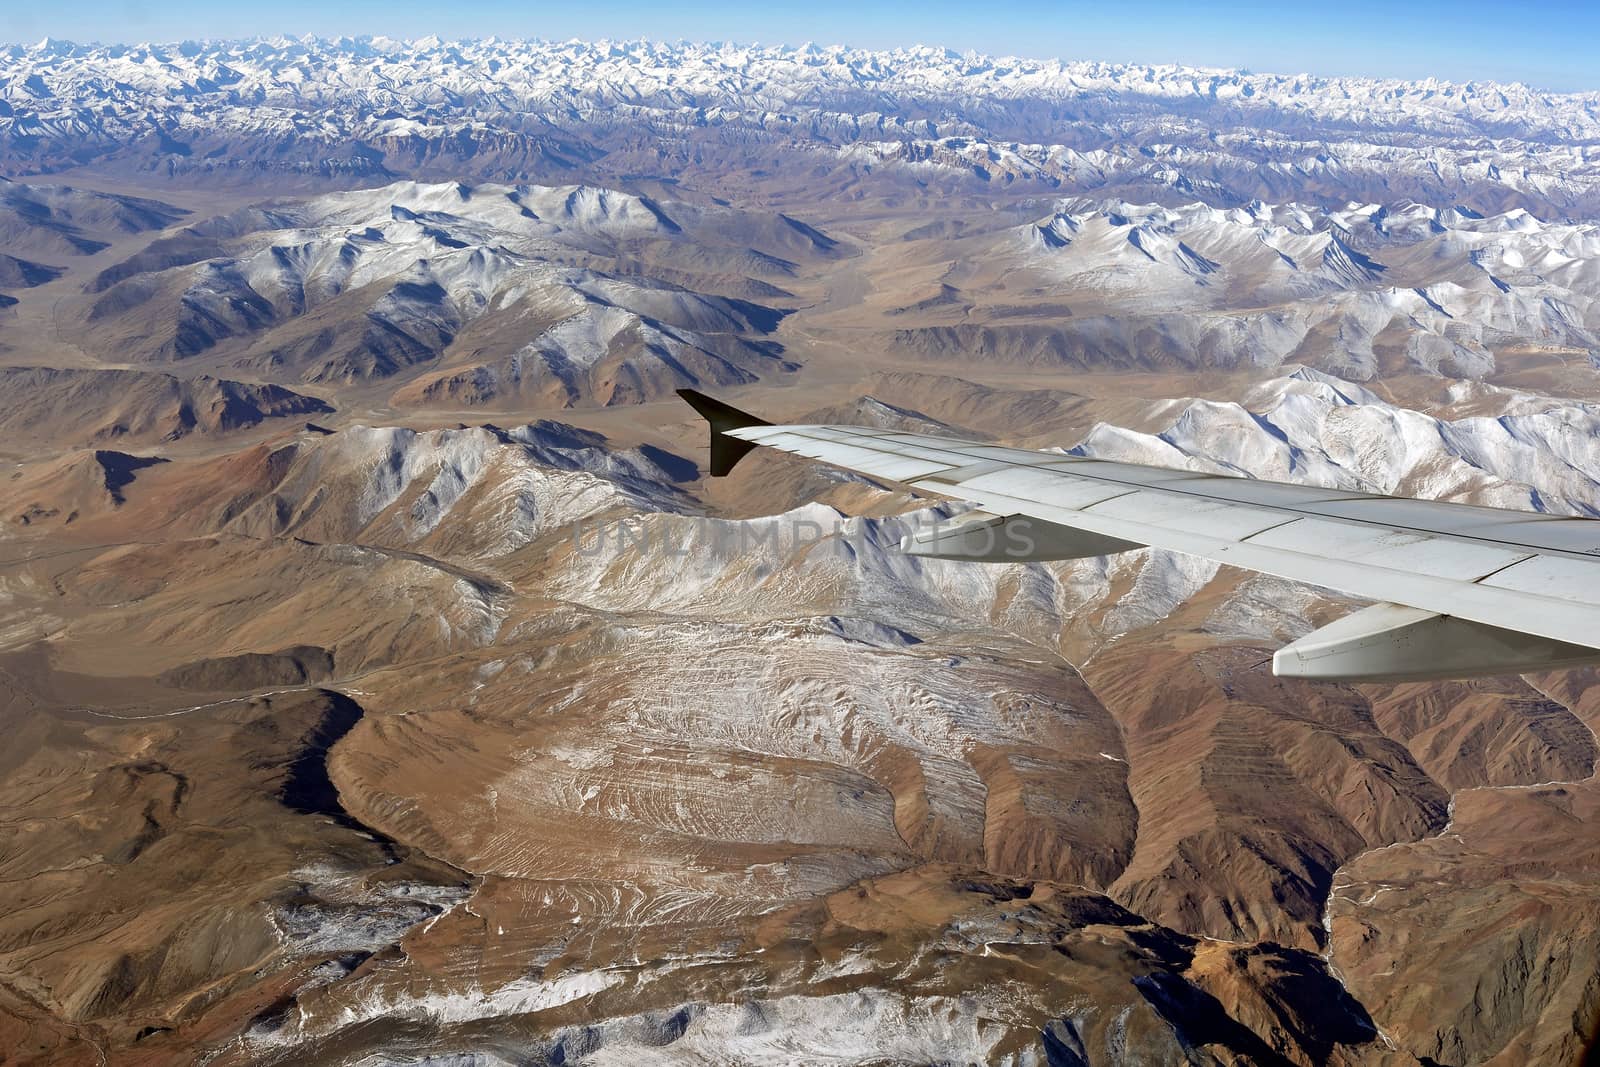 Mountain range, Leh, Ladakh, India by think4photop